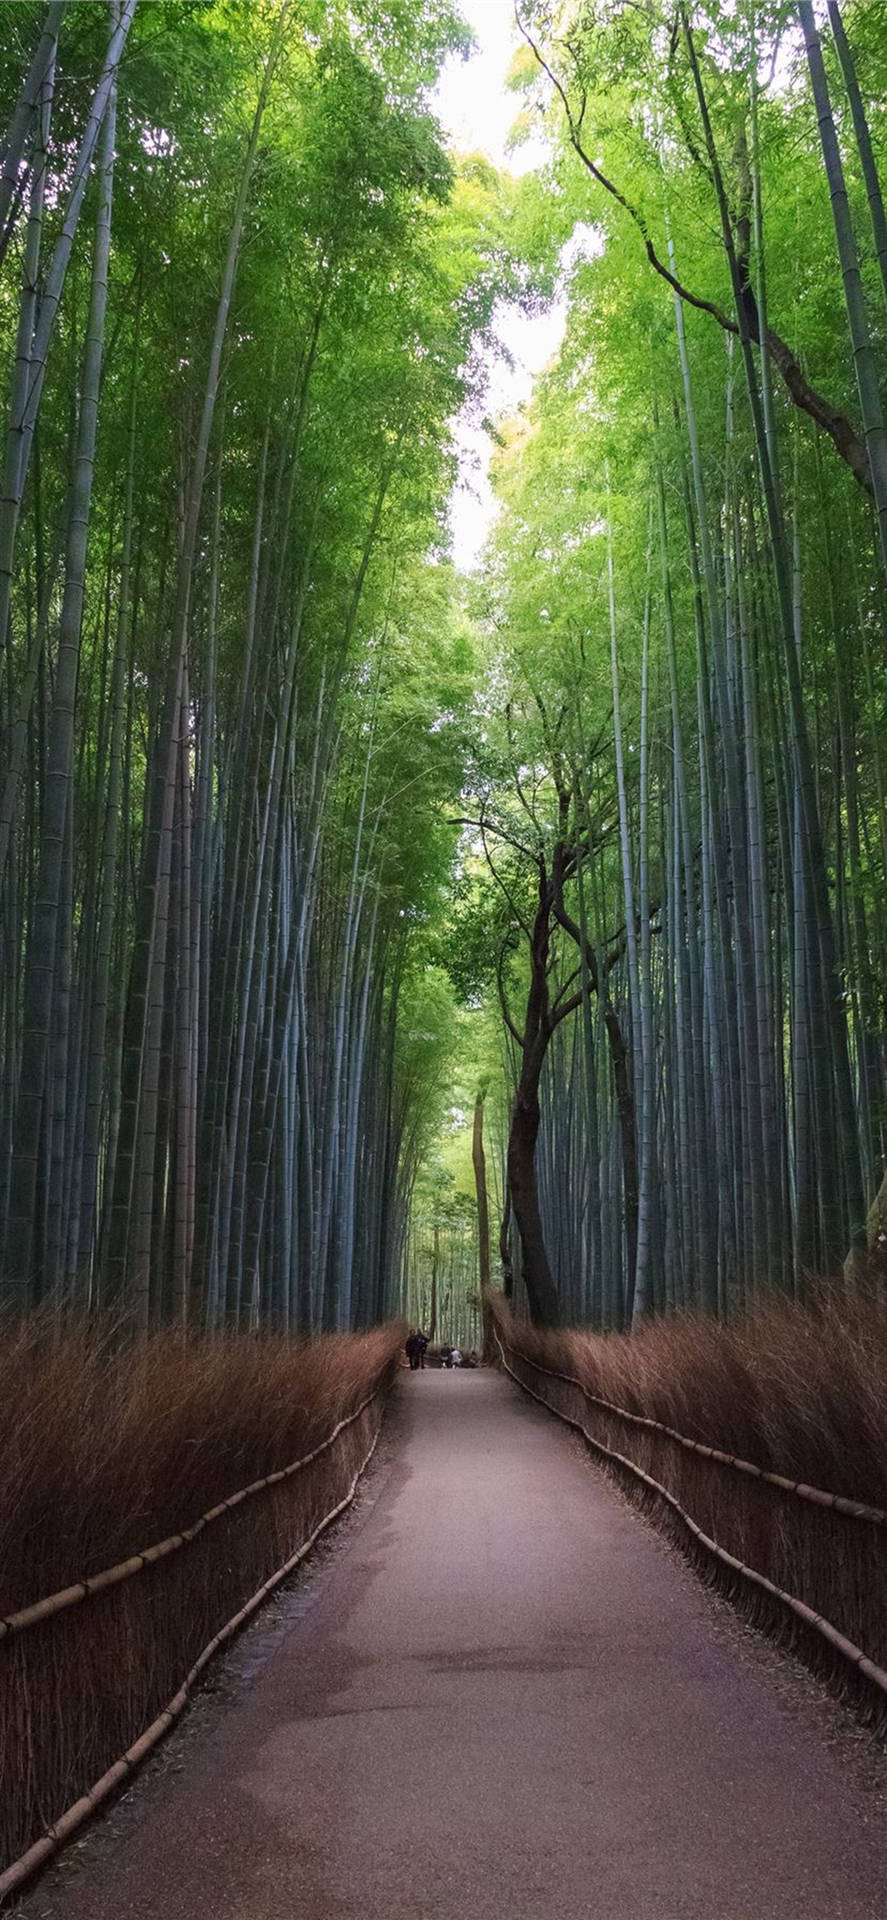 Tall Bamboo Pathway IPhone Wallpaper